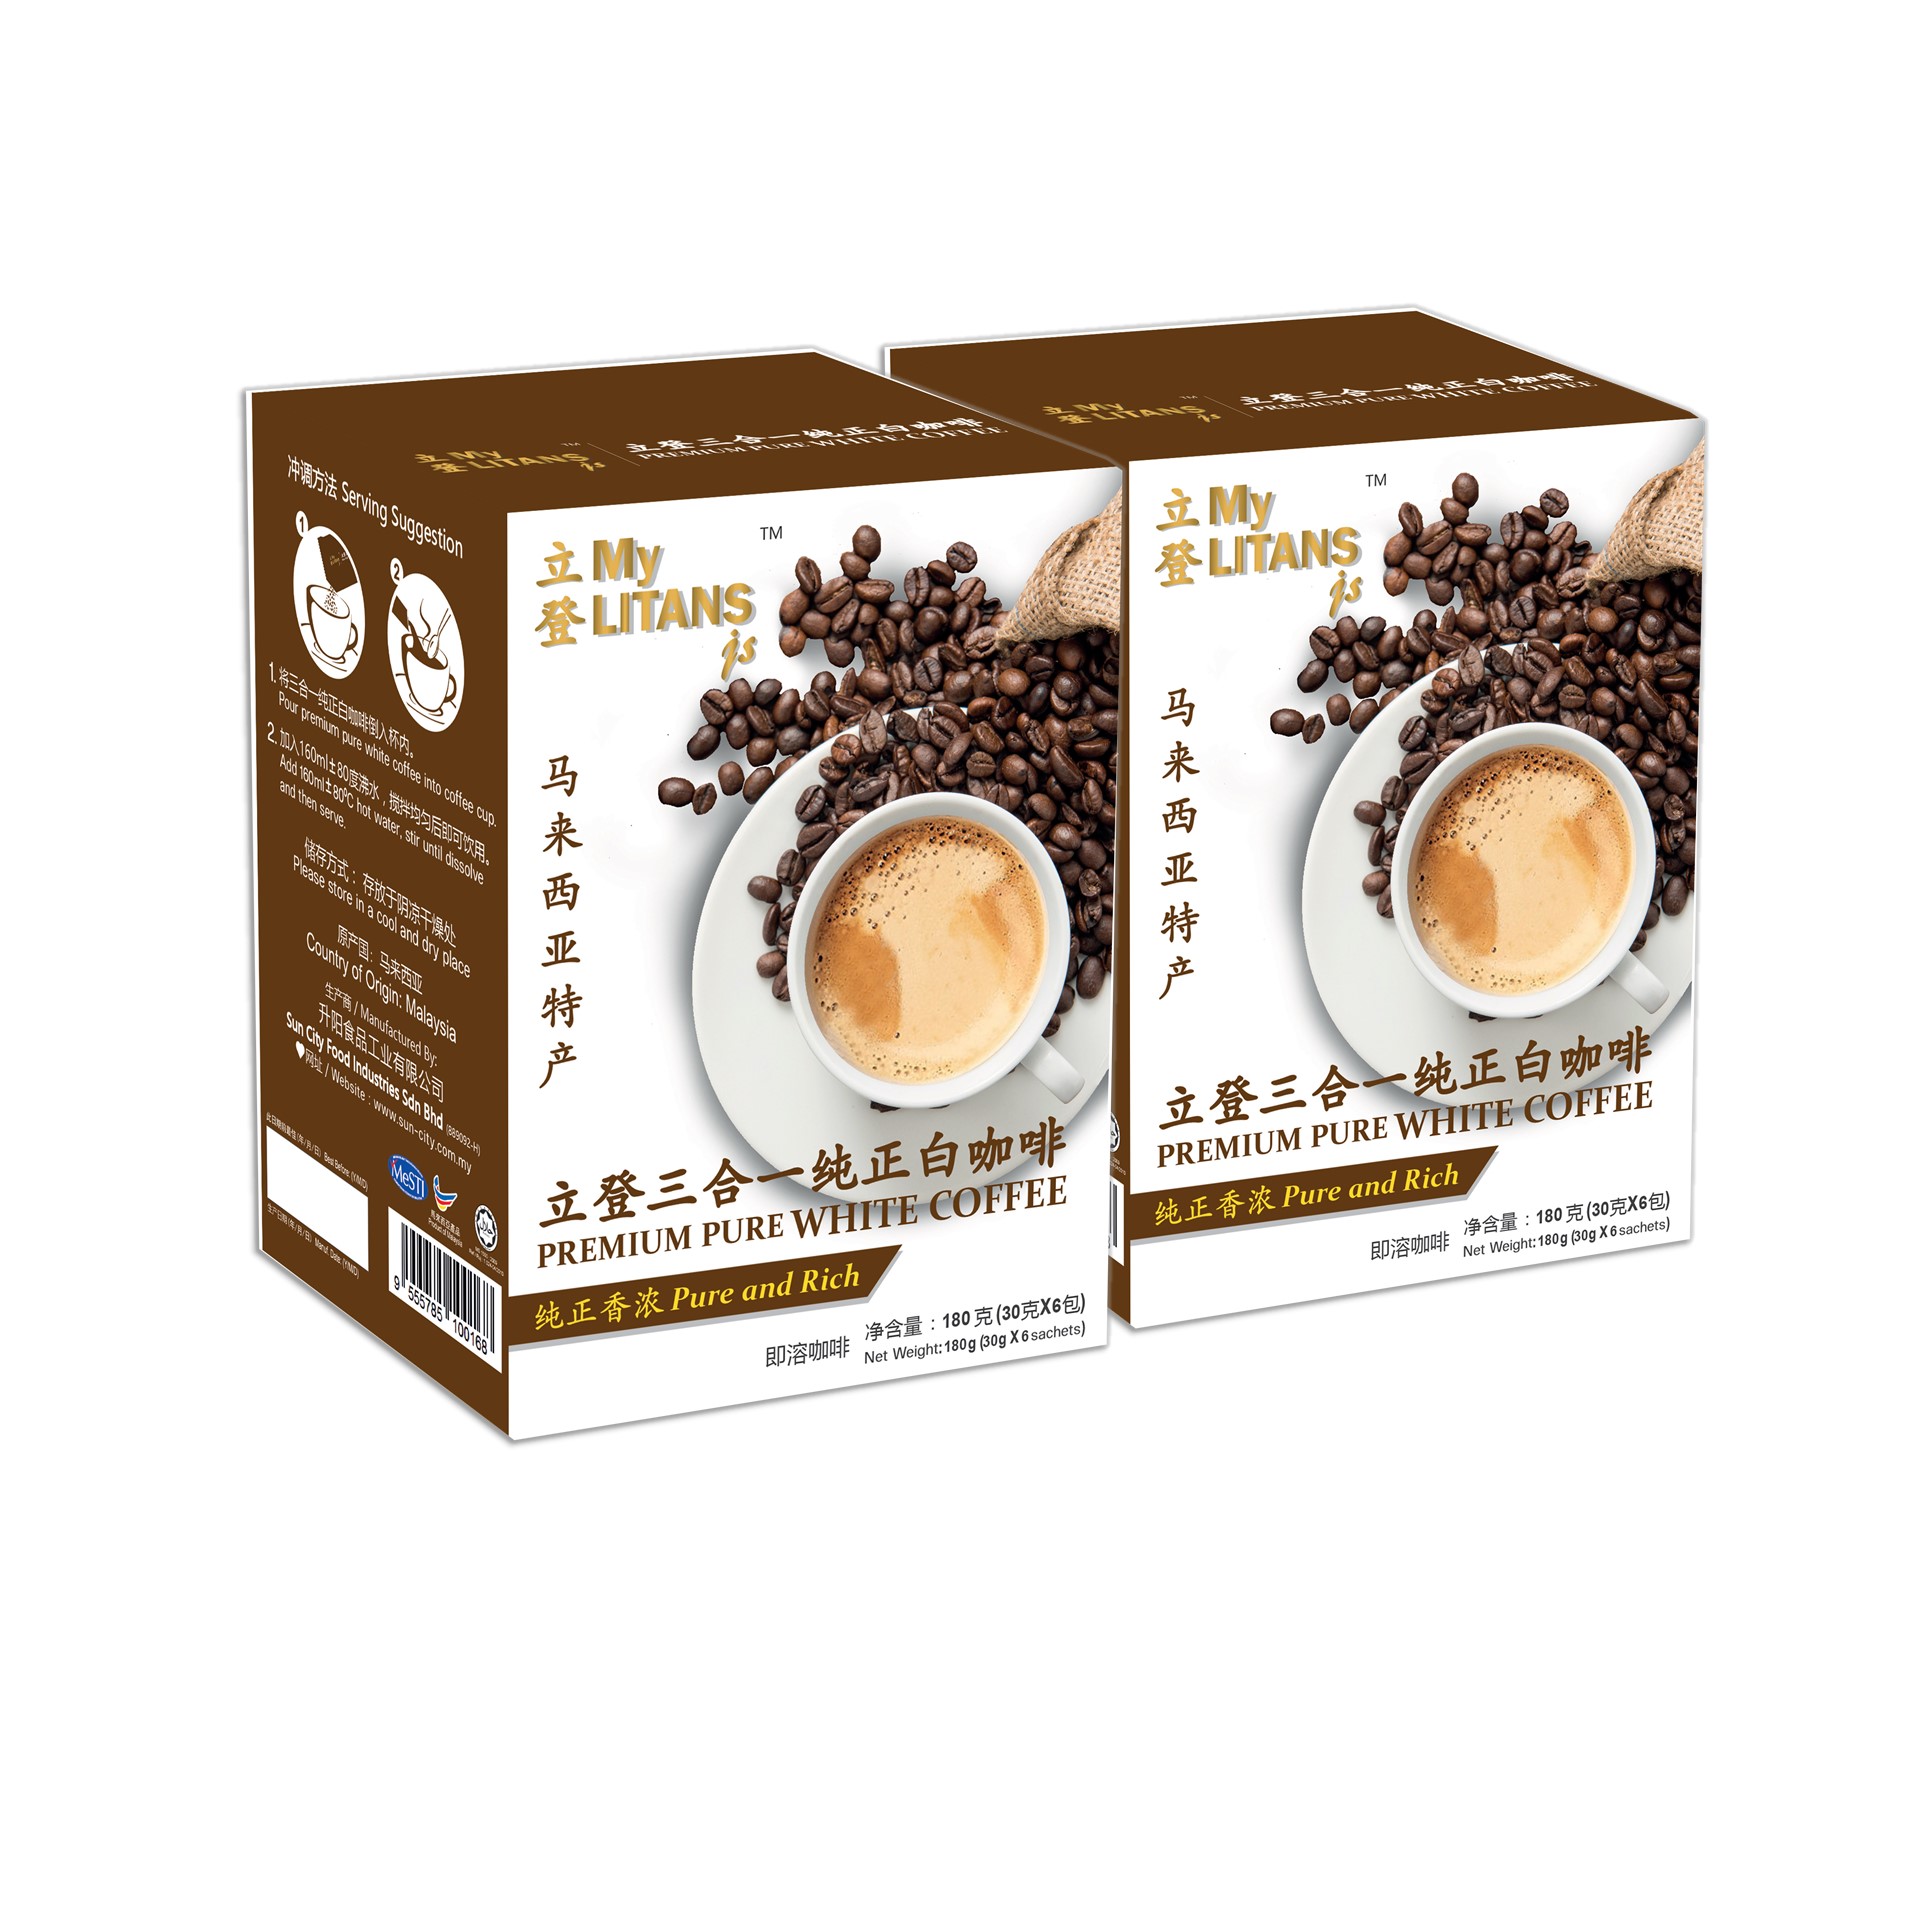 MyLITANSjs 3 in 1 Premium Pure White Coffee [2 boxes](30g x 6 sachets)